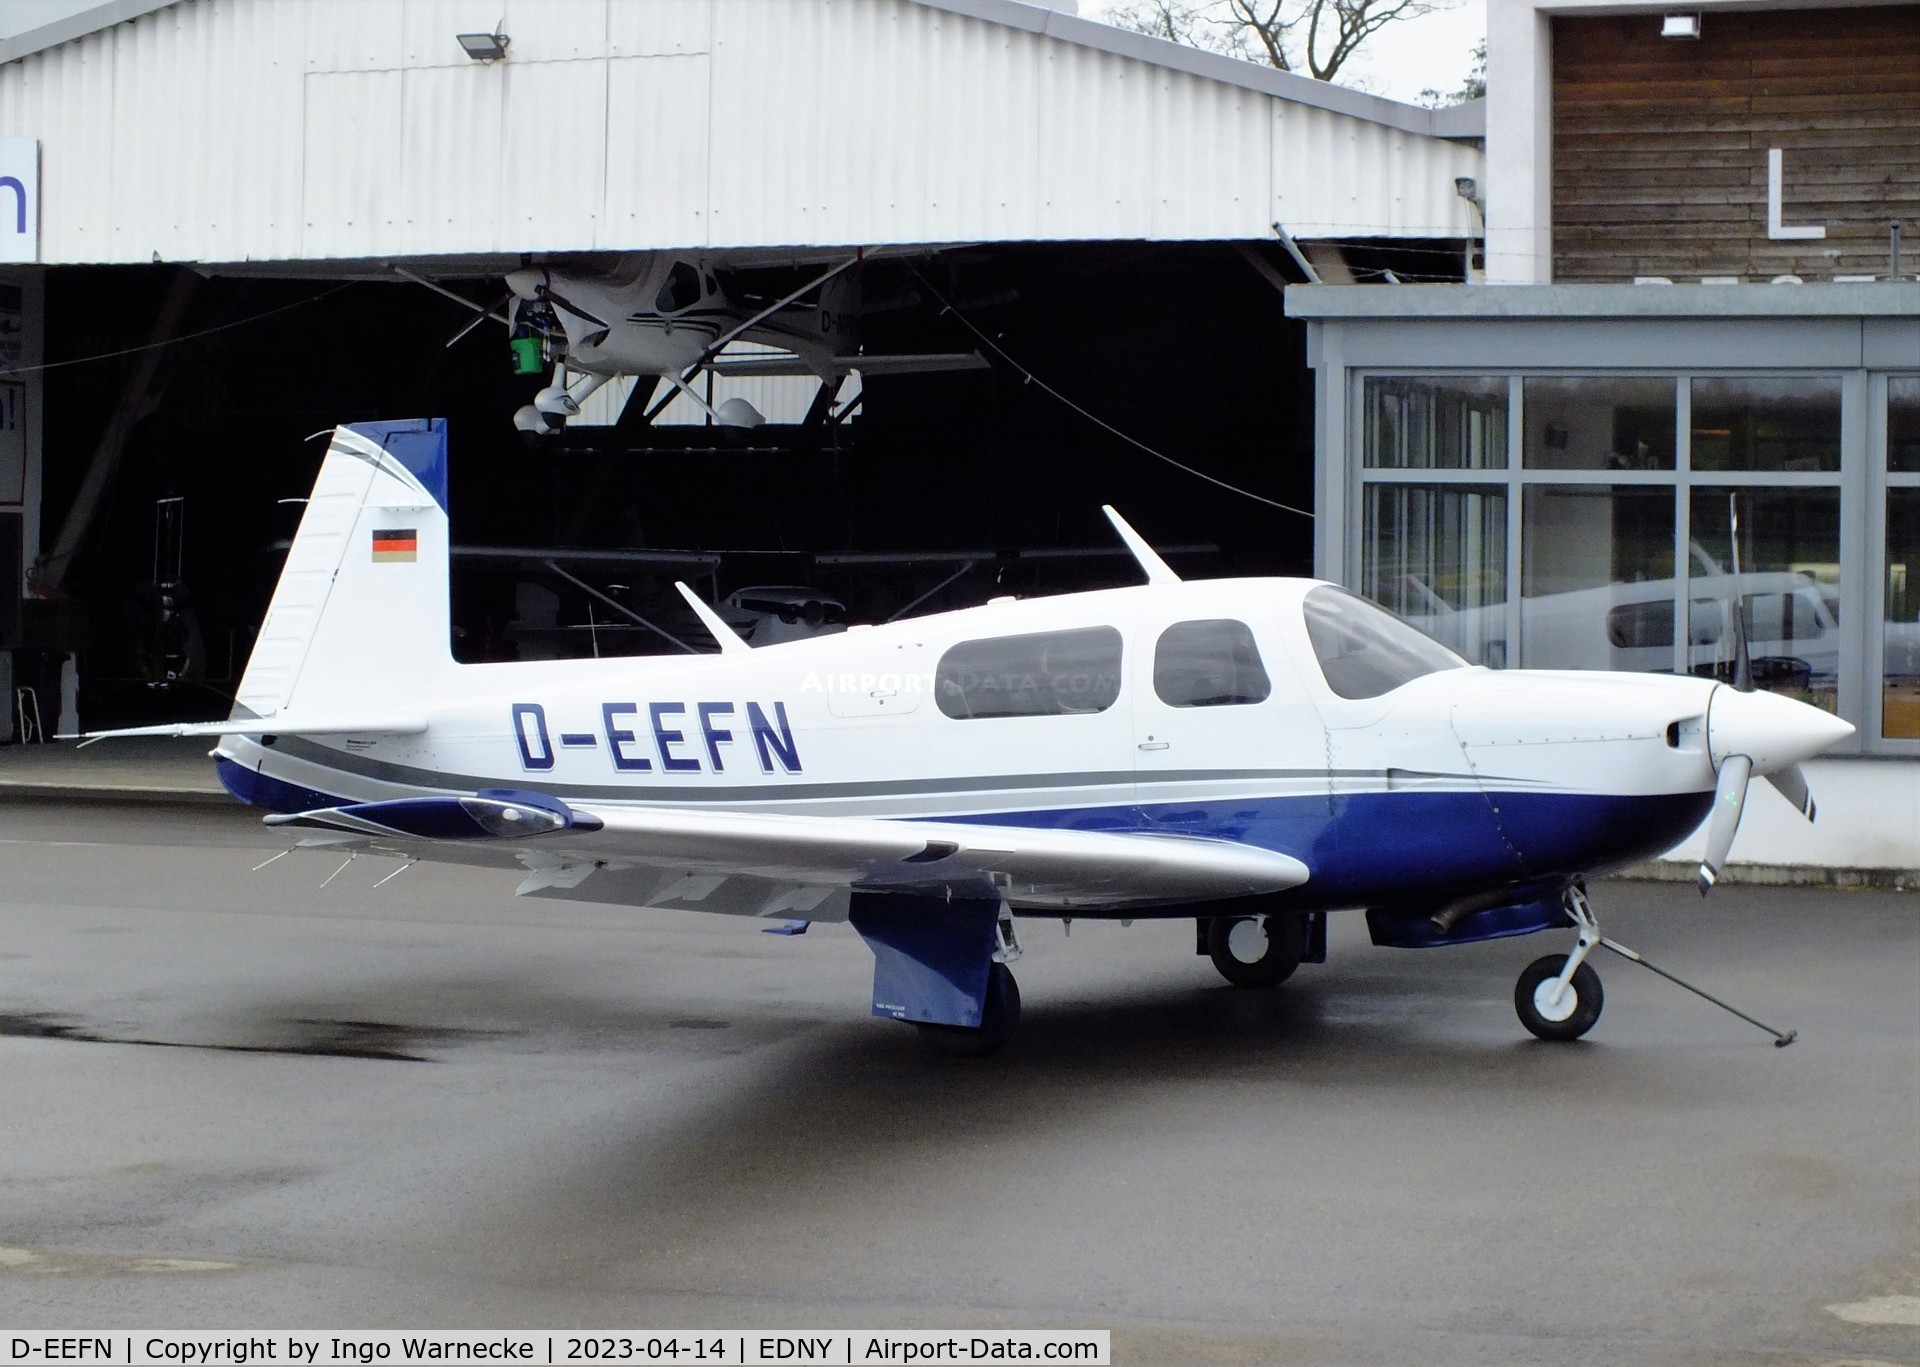 D-EEFN, 1991 Mooney M20J 201 C/N 24-3215, Mooney M20J Model 201 at Friedrichshafen-Bodensee airport